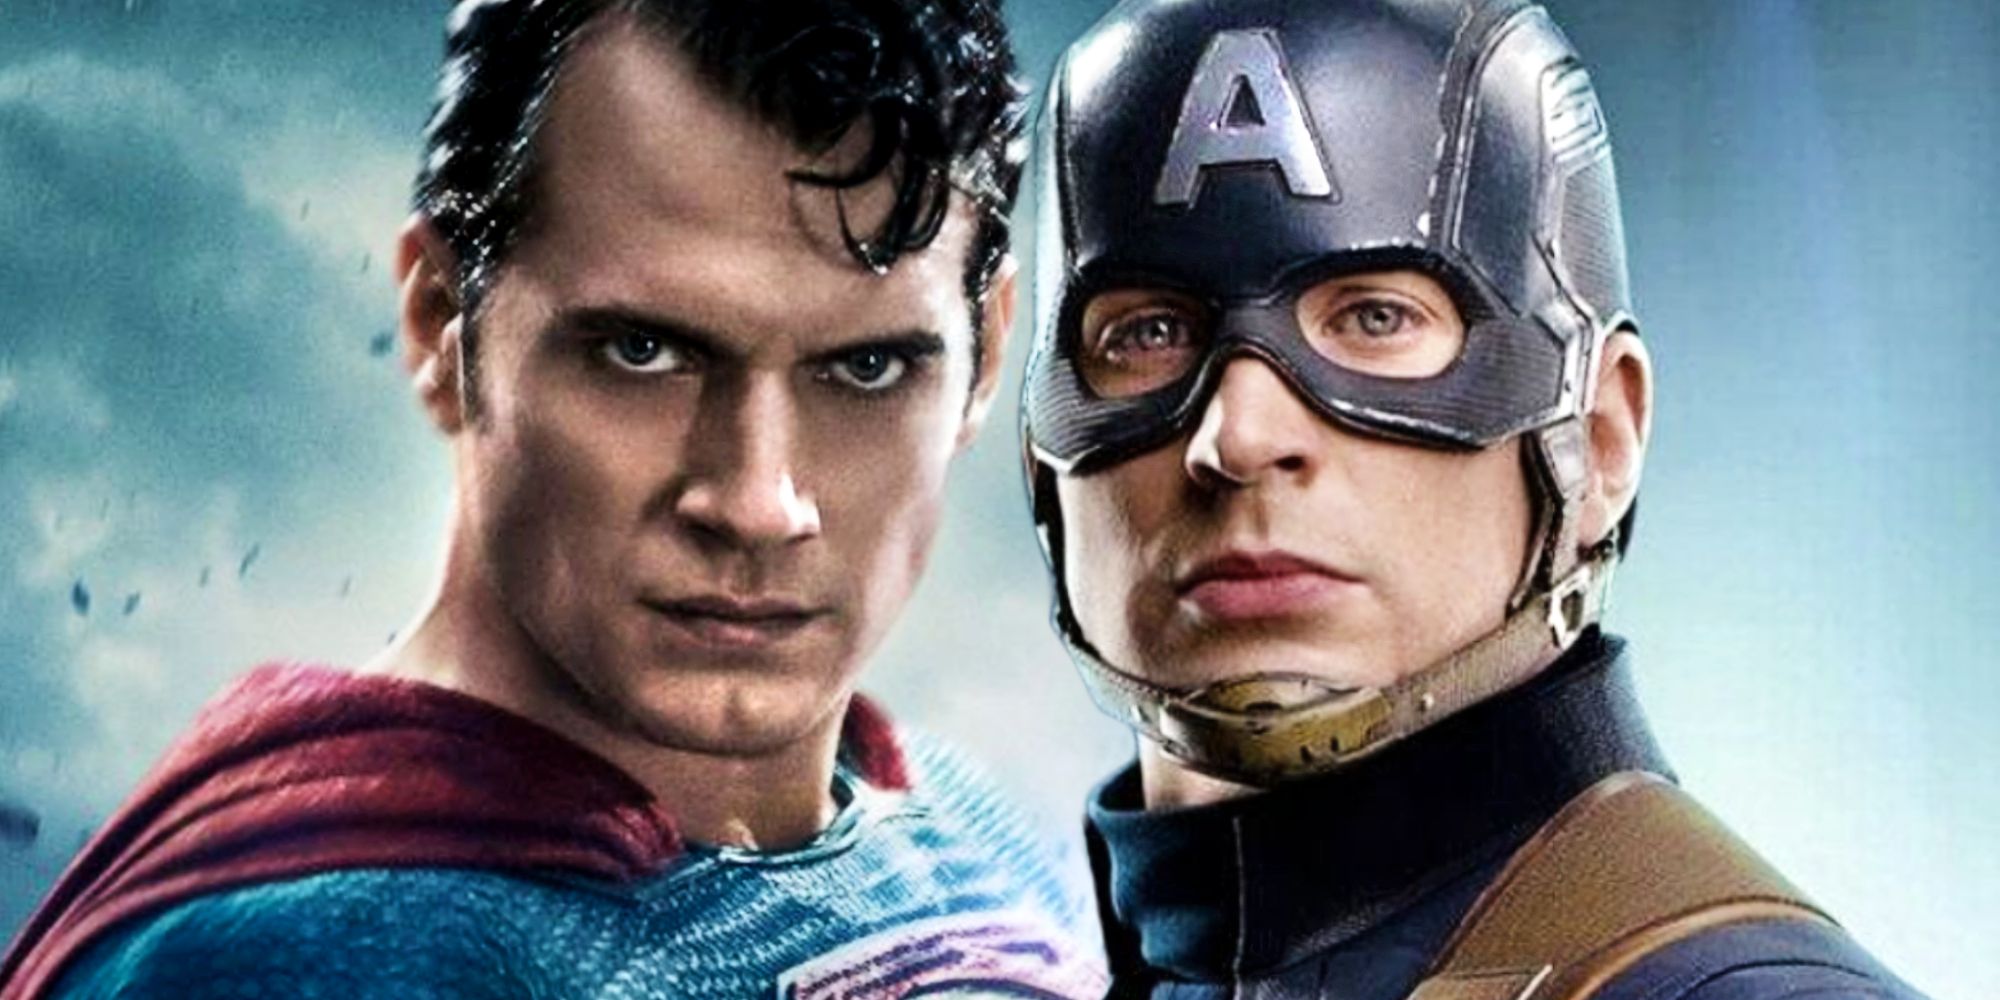 Henry Cavill's Superman vs Chris Evans' Captain America